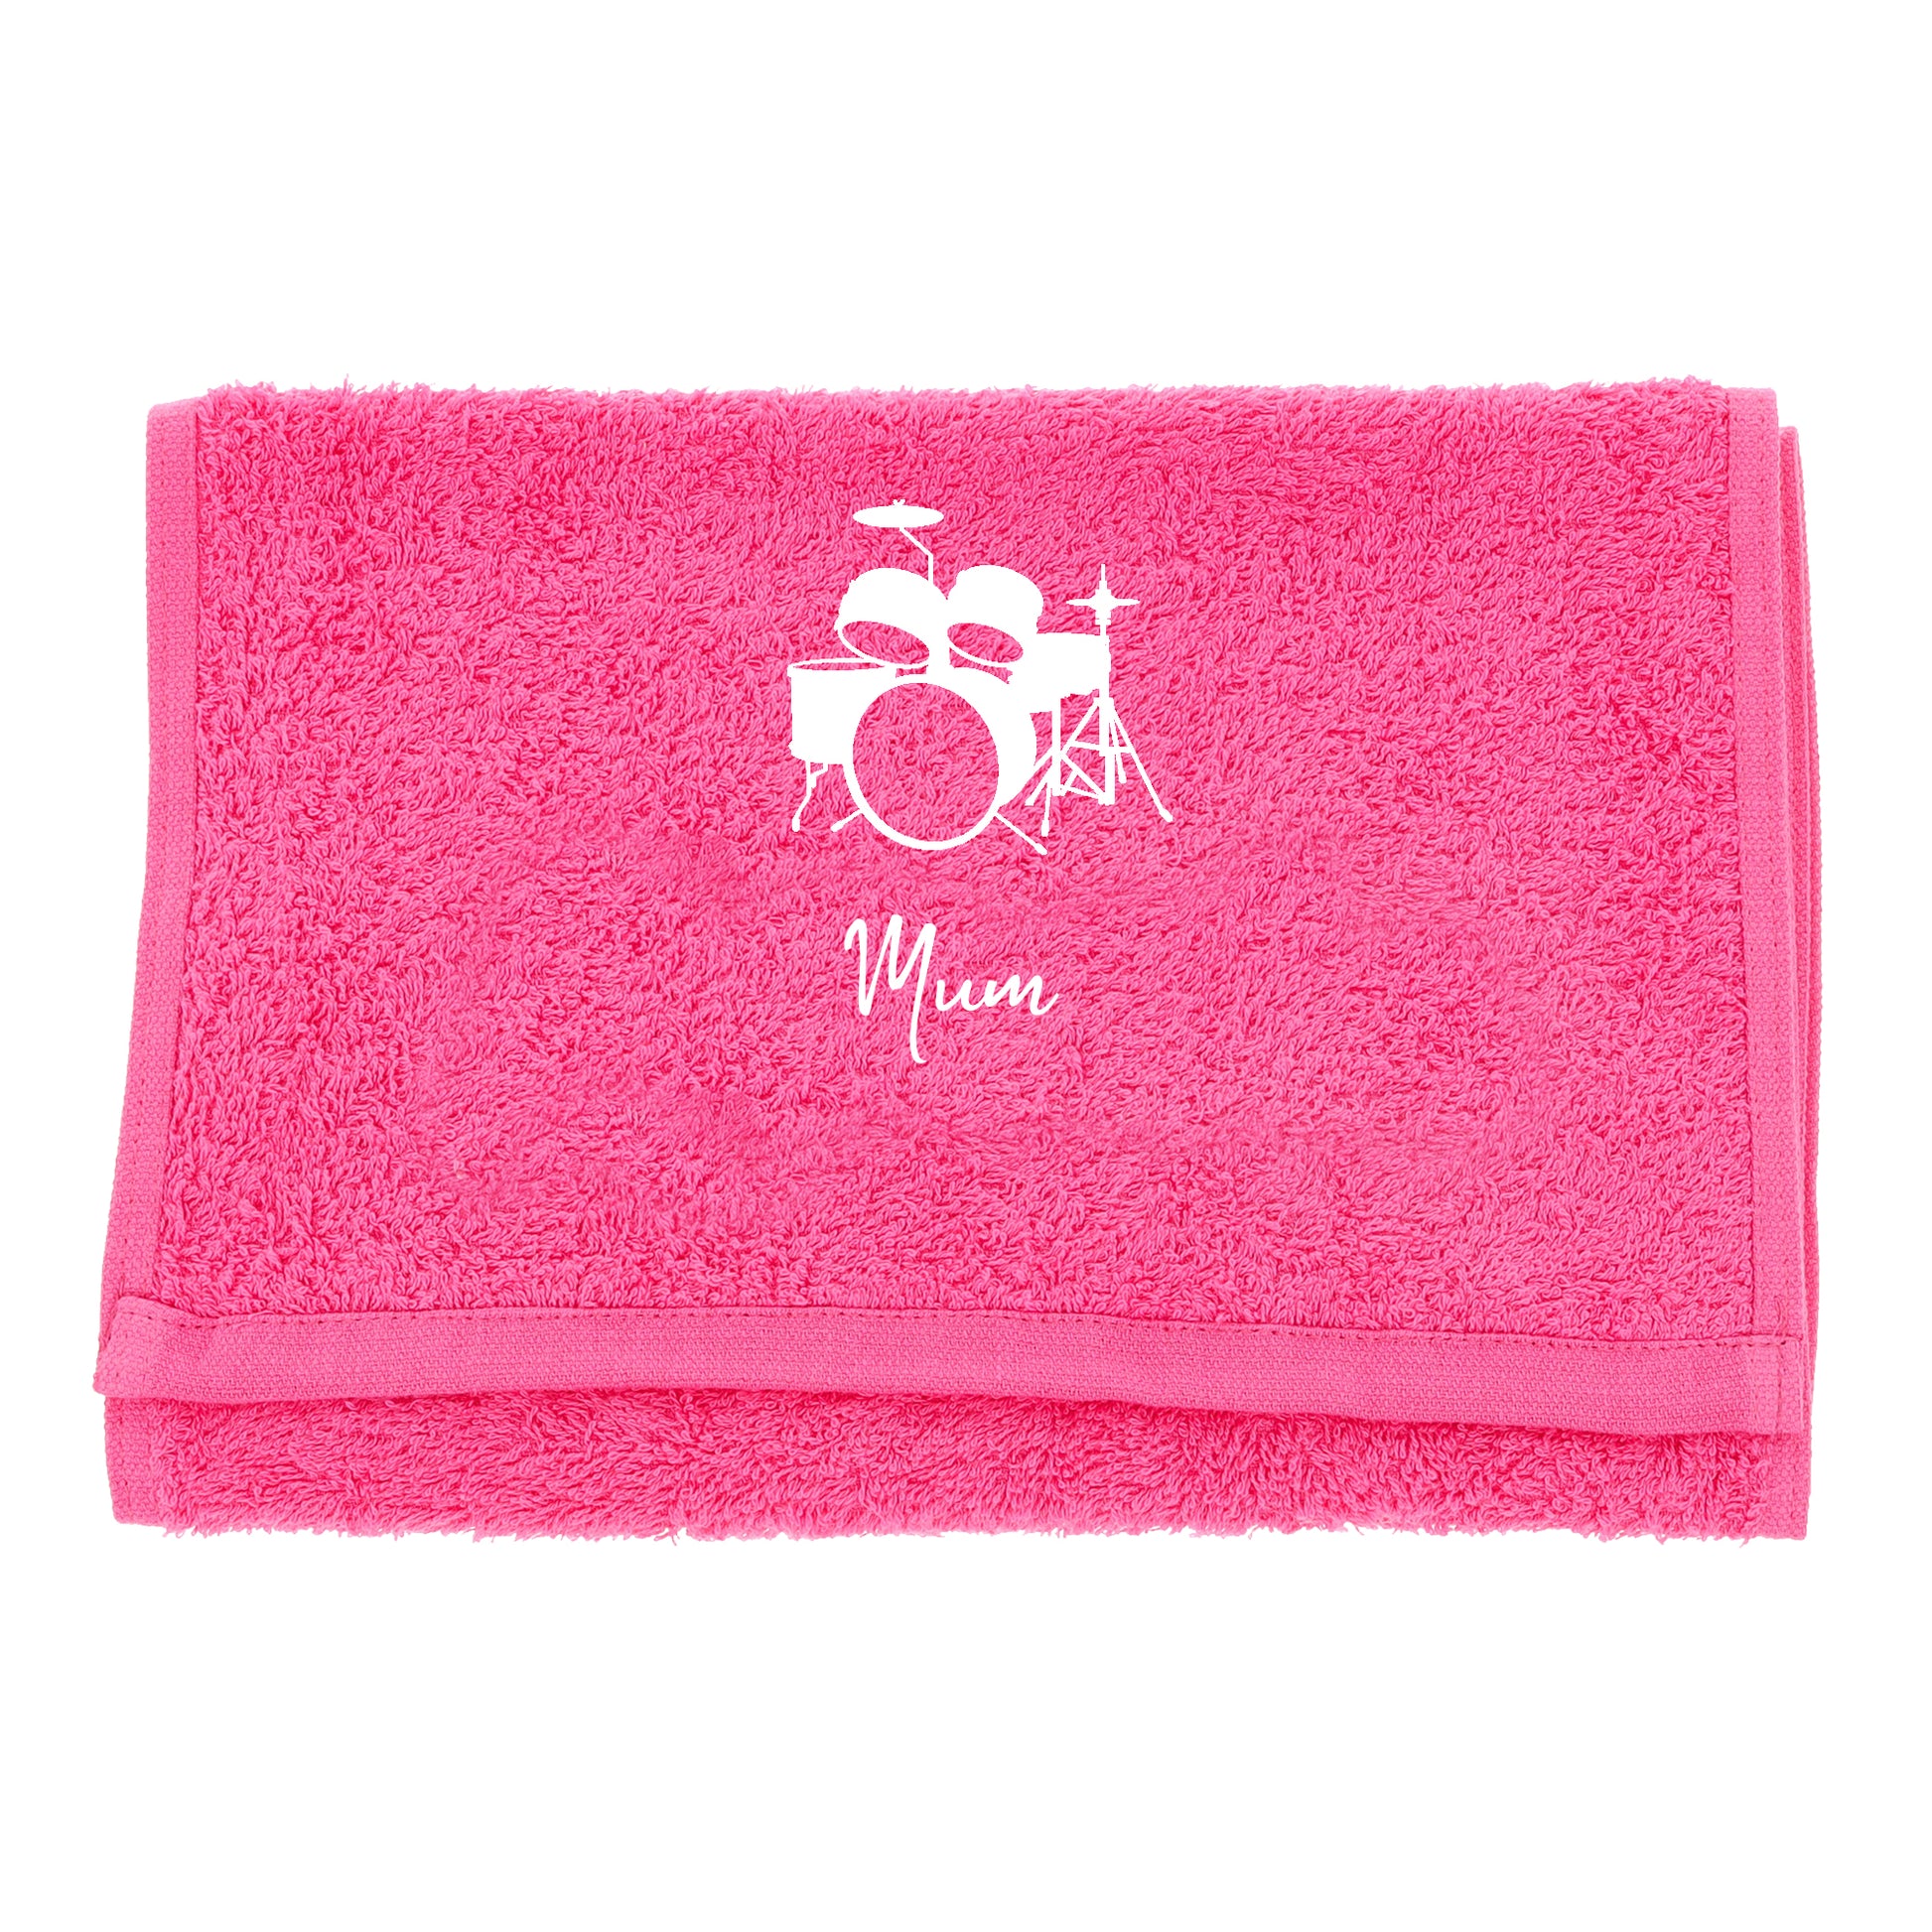 Personalised Embroidered Drummer Towel  - Always Looking Good - Pink  